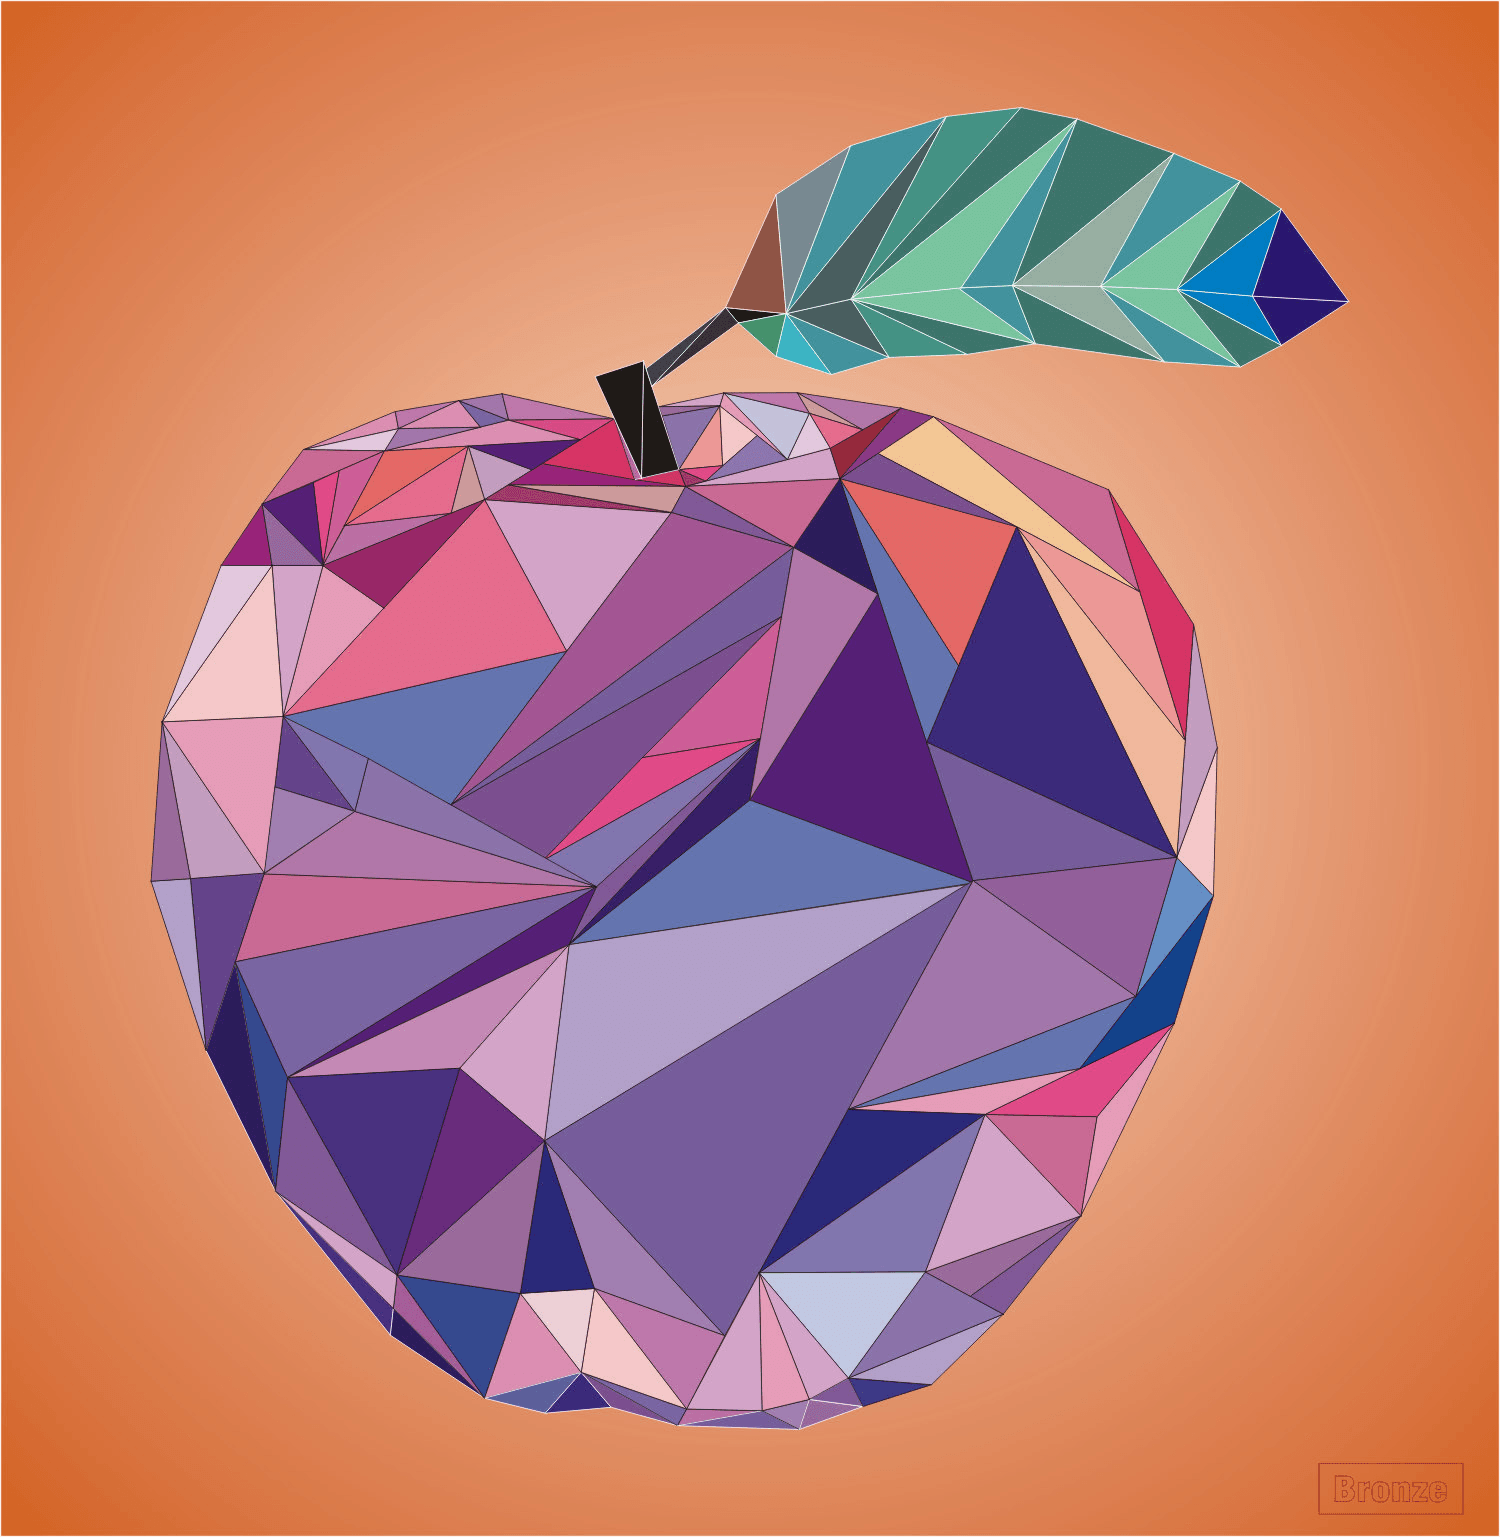  Polygon Apple 002 - BRONZE